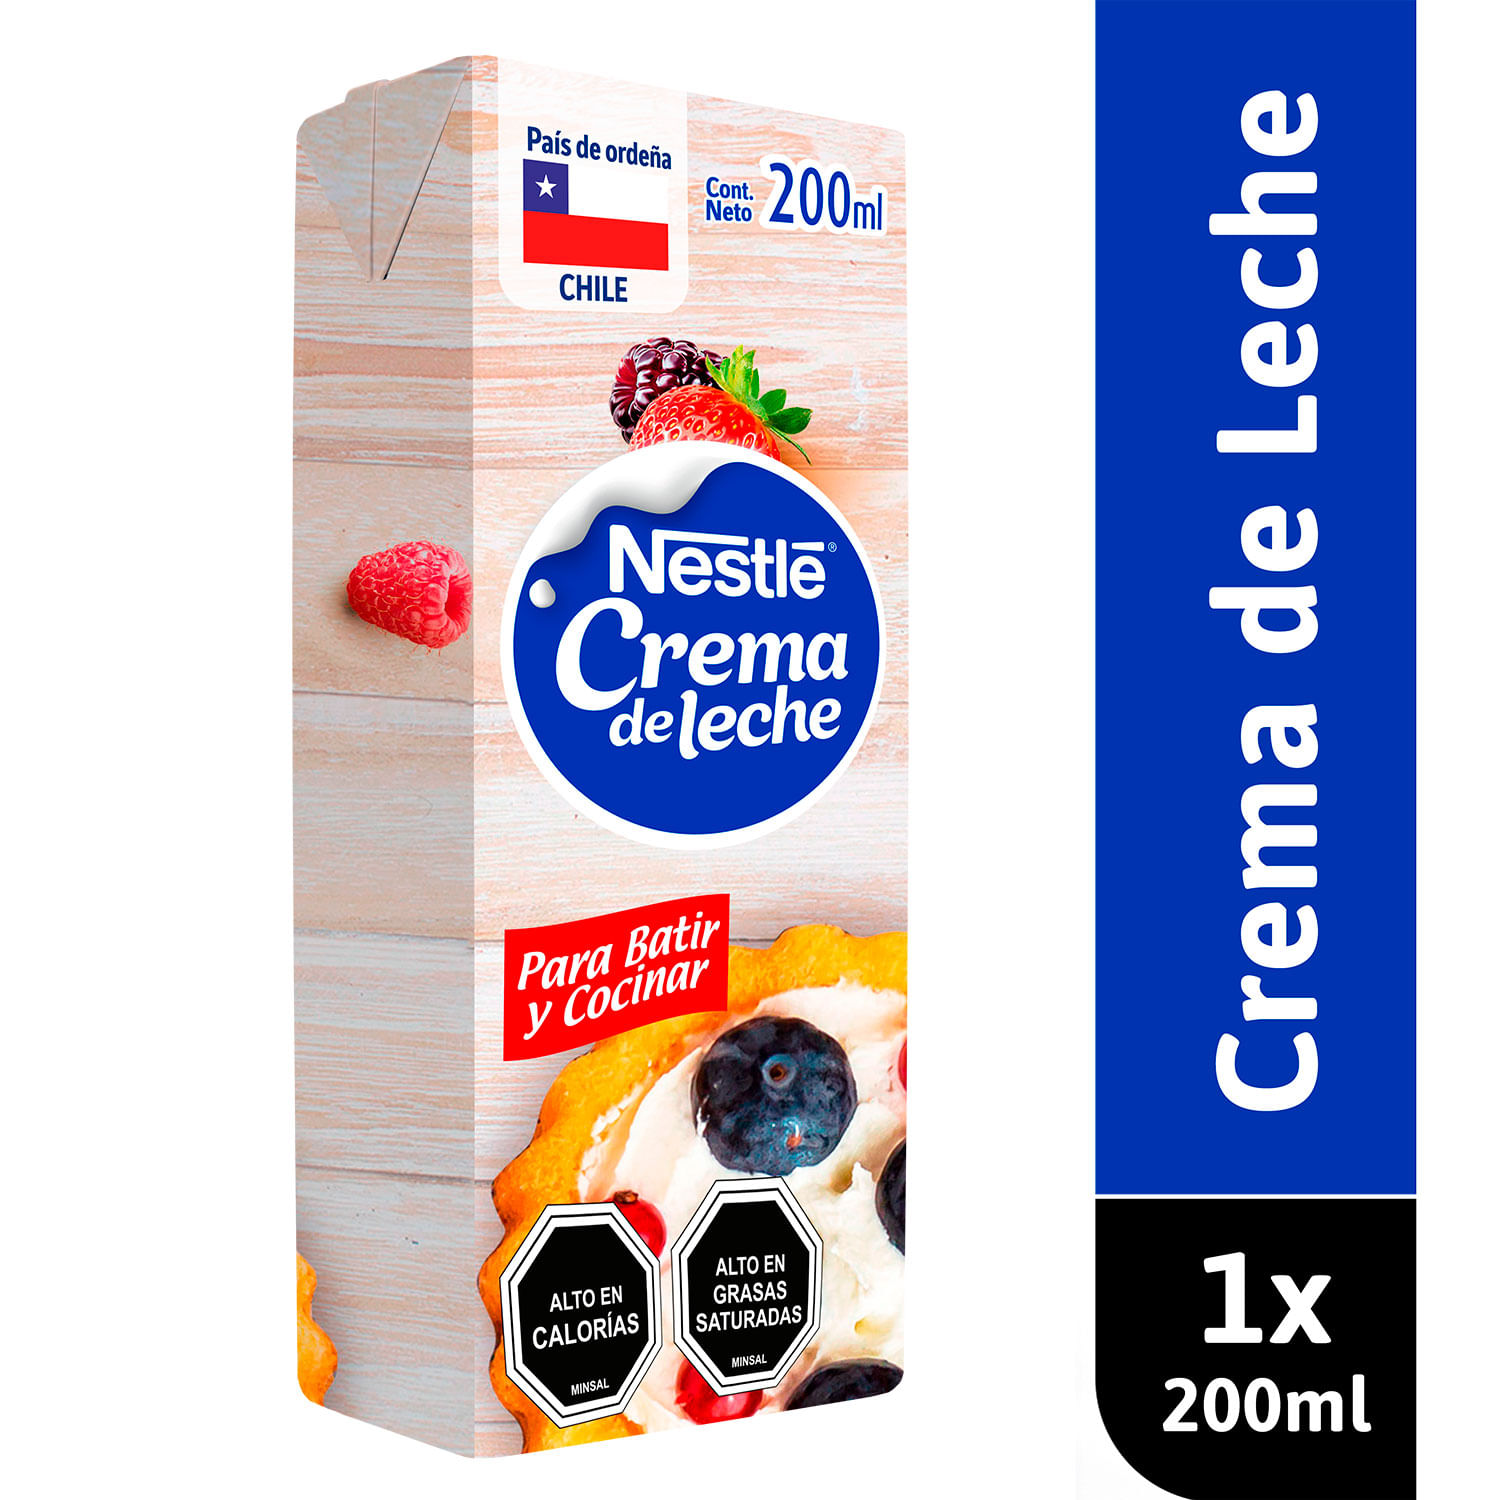 Crema de leche Nestlé tetra 1 L